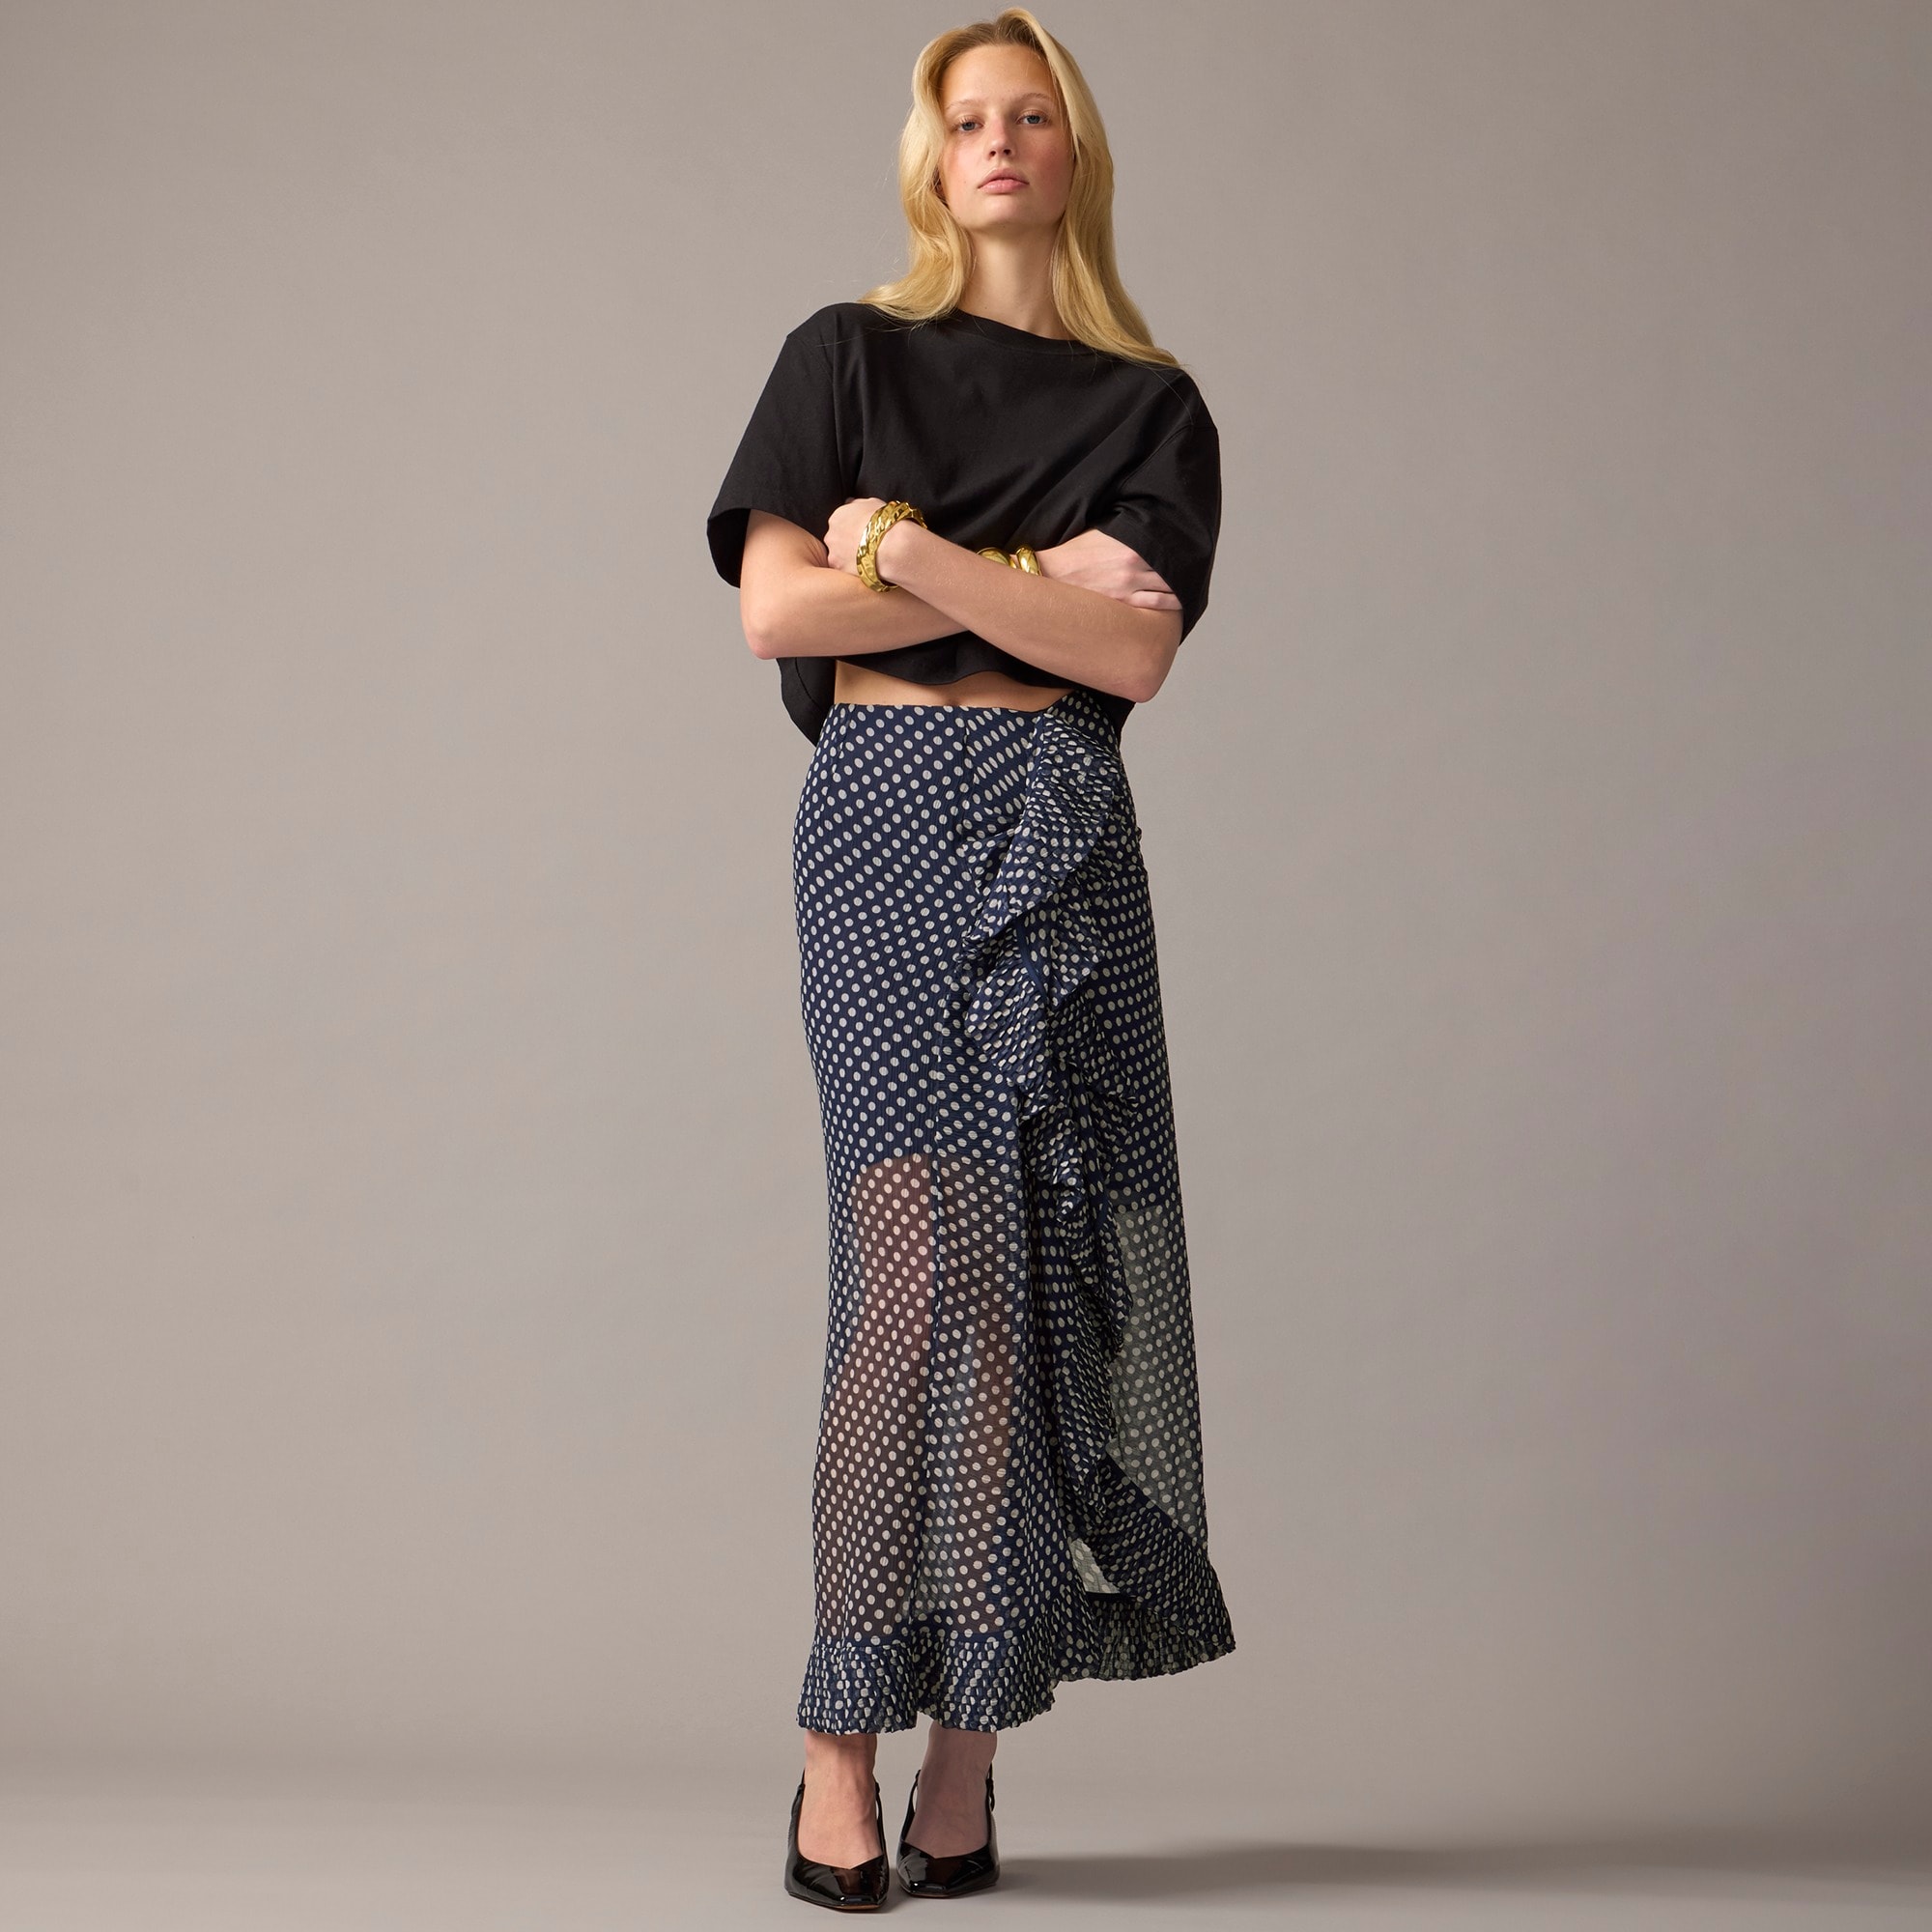 Jcrew Collection chiffon ruffle skirt in dot